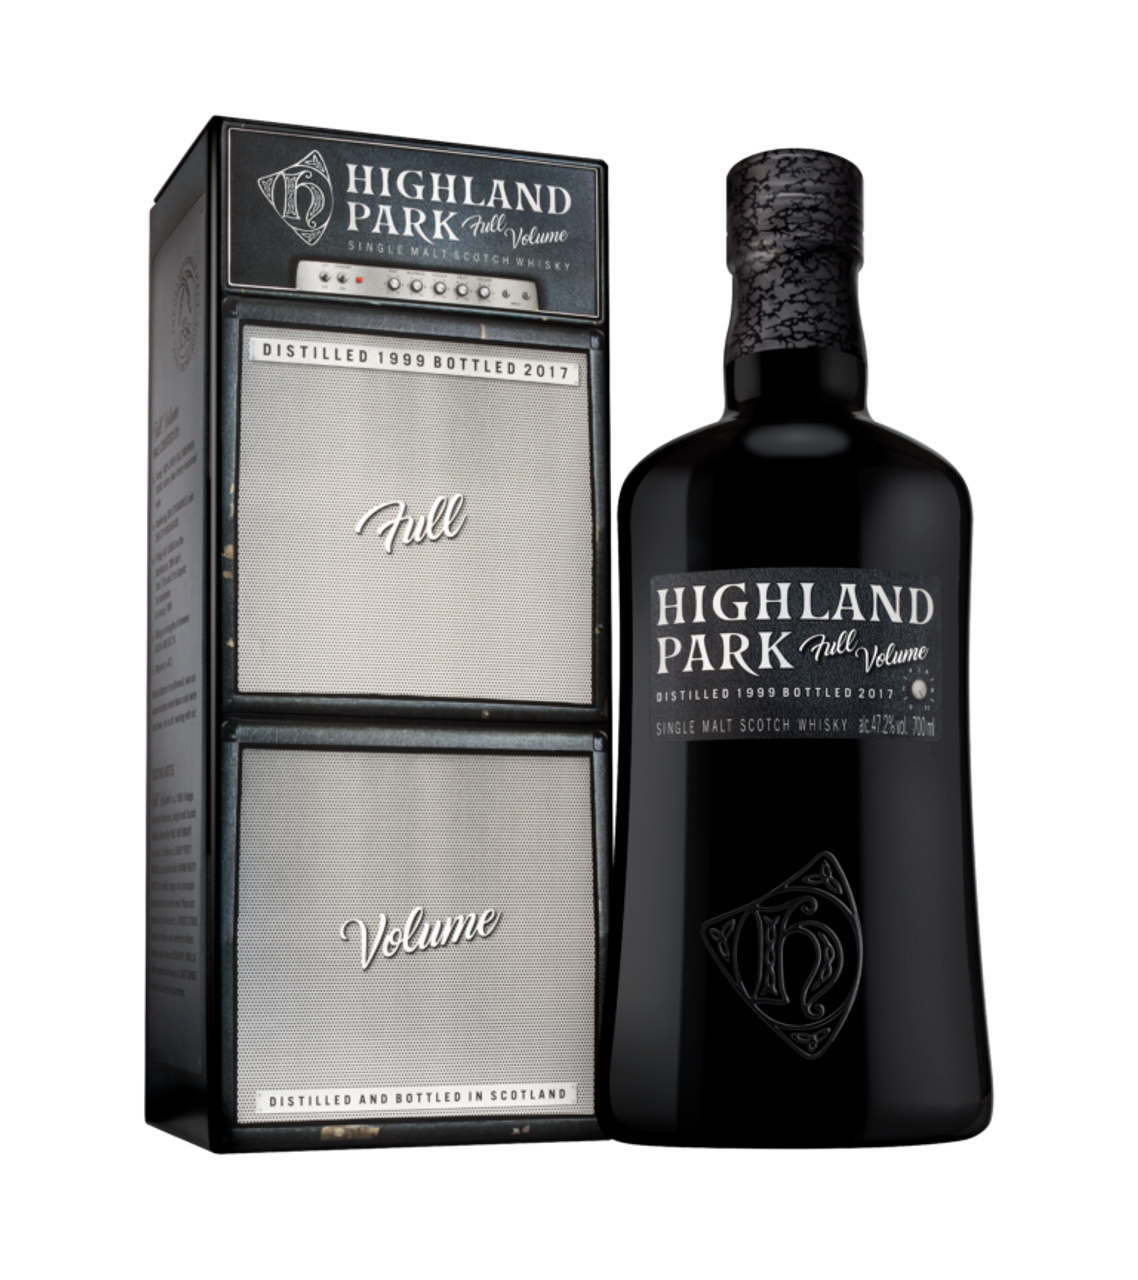 Highland Park 17 Full - Shop Volume Whisky - Year Old, Francisco San The